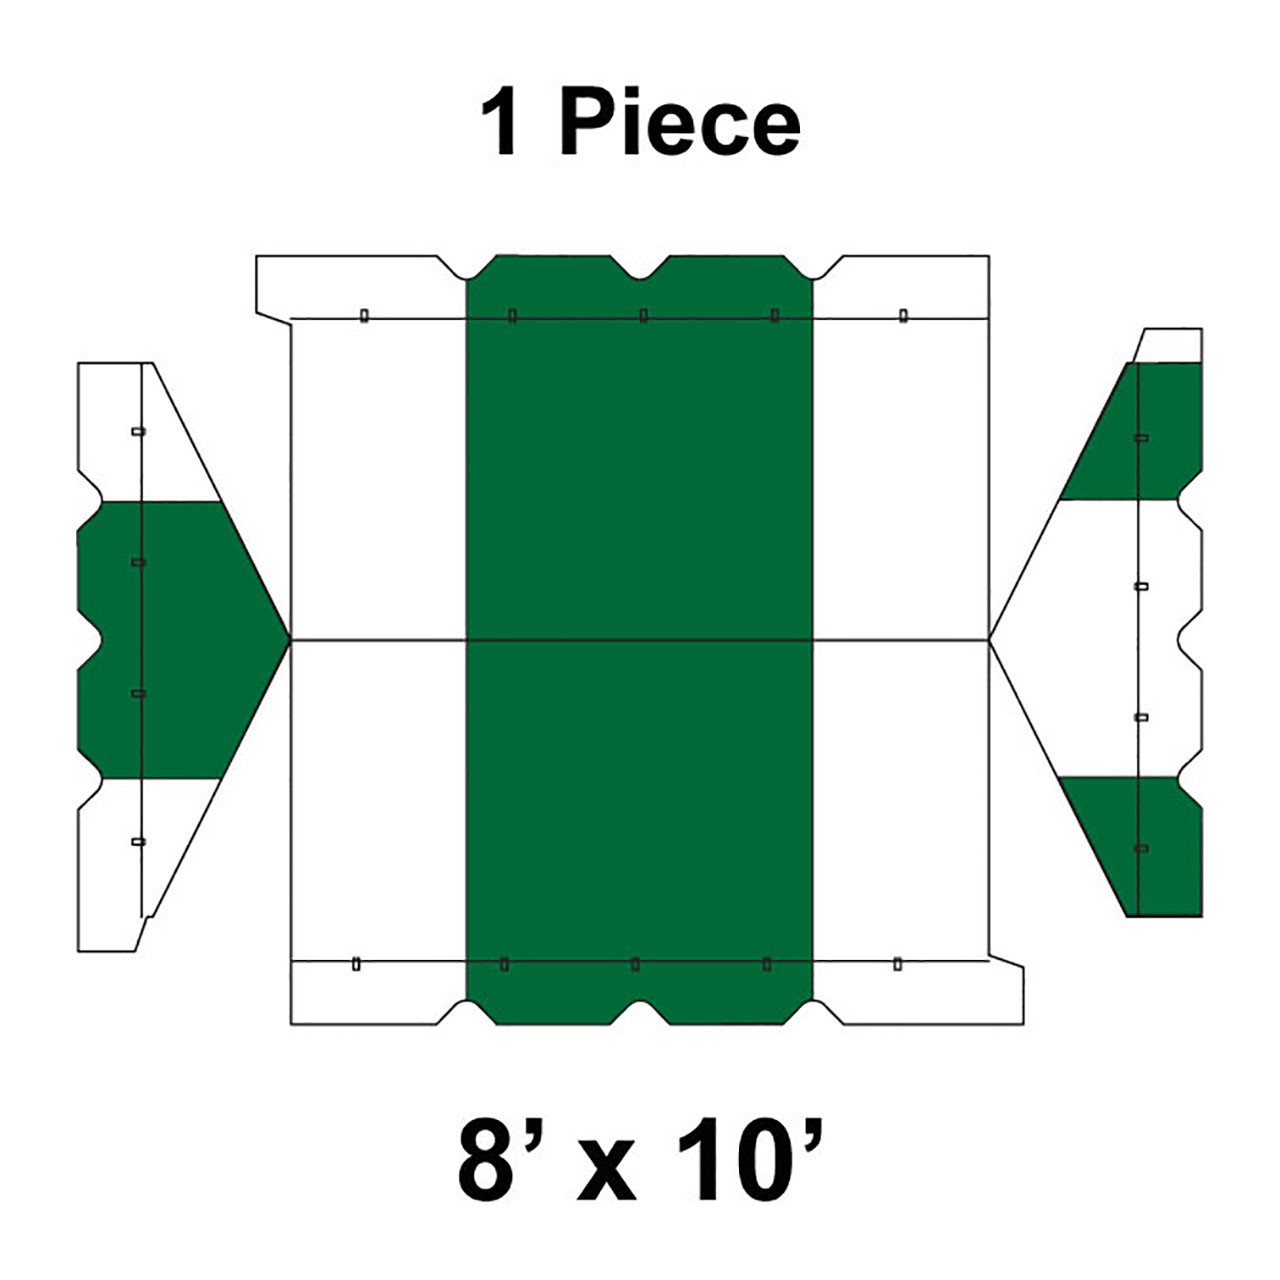 8' x 10' Gable Frame Tent, 1 Piece, 16 oz. Ratchet Top Replacement